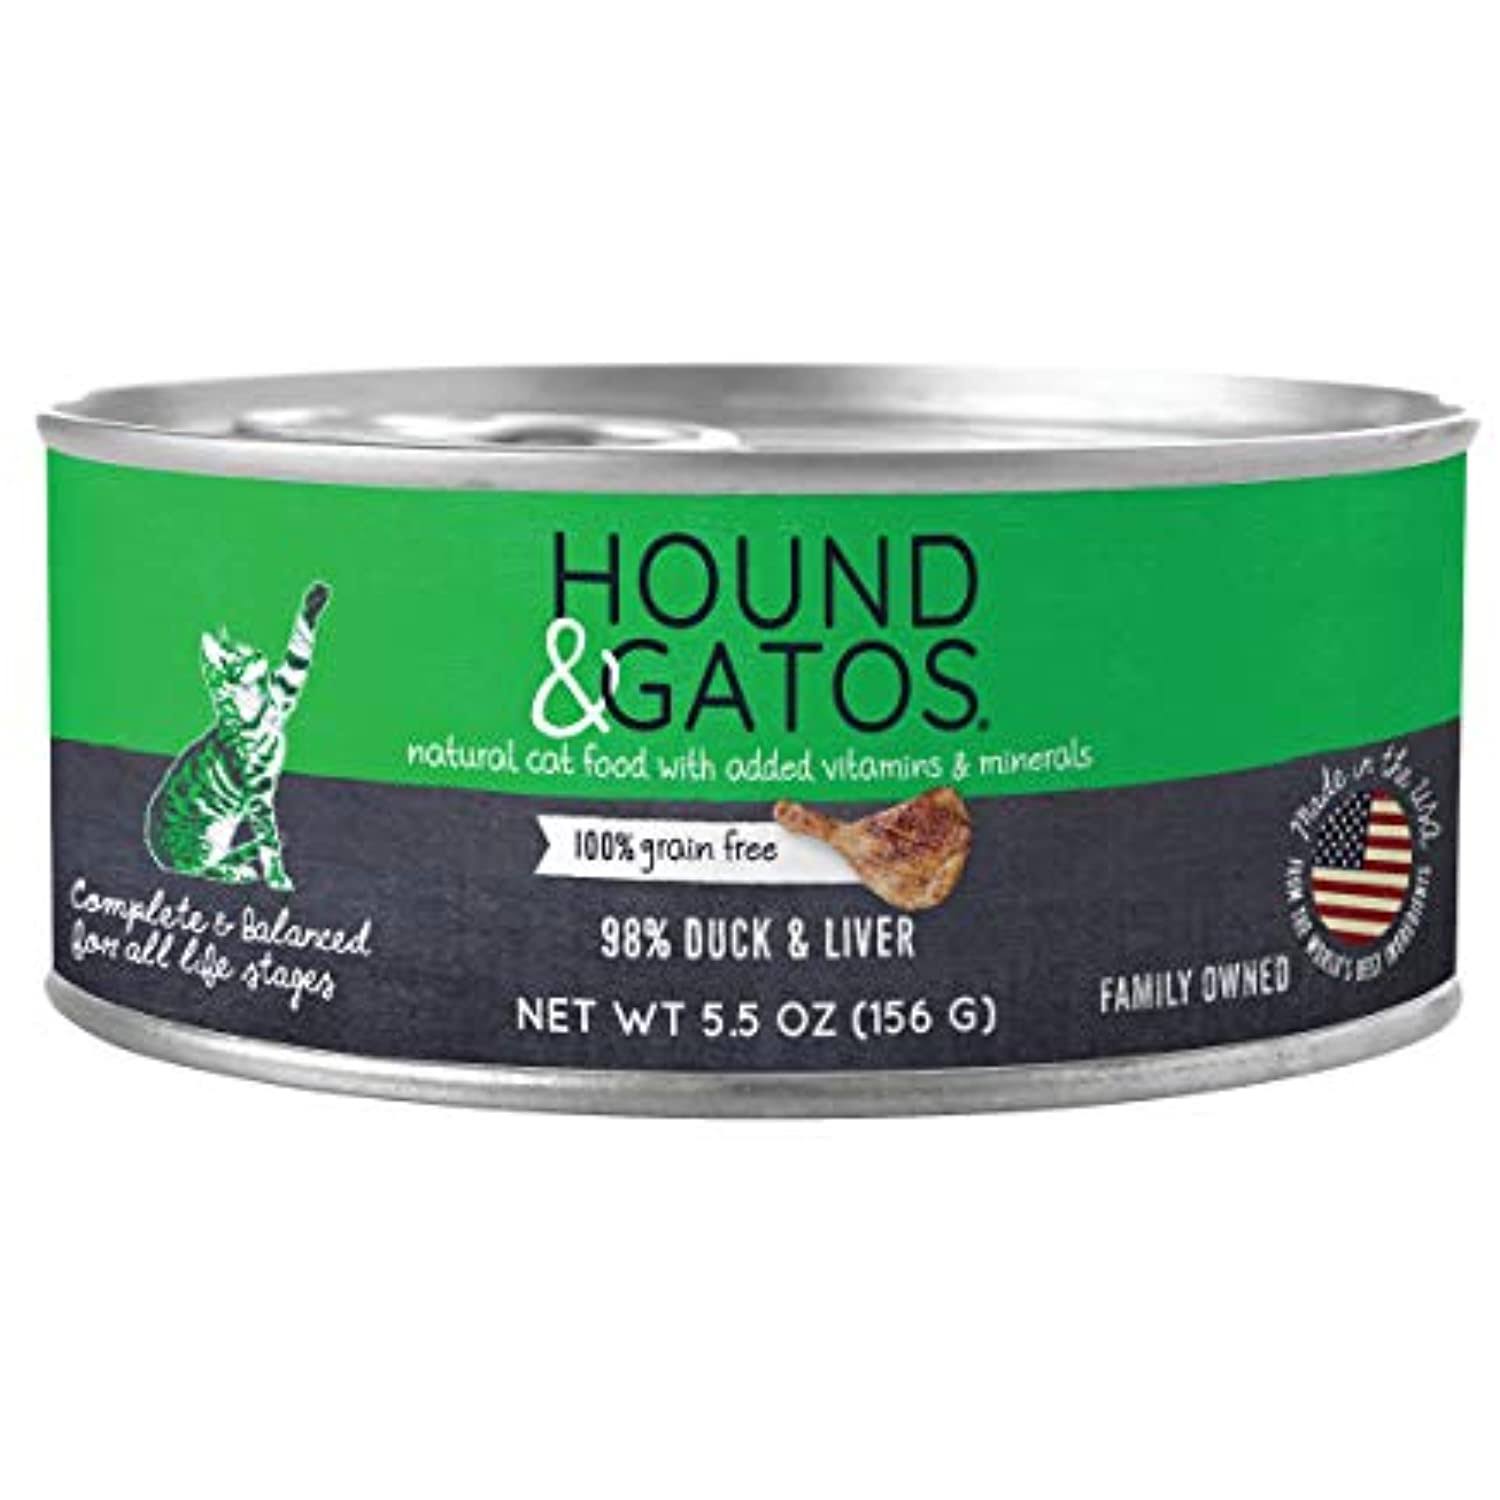 Hound & Gatos Canned Cat Food 5.5oz, Duck & Liver